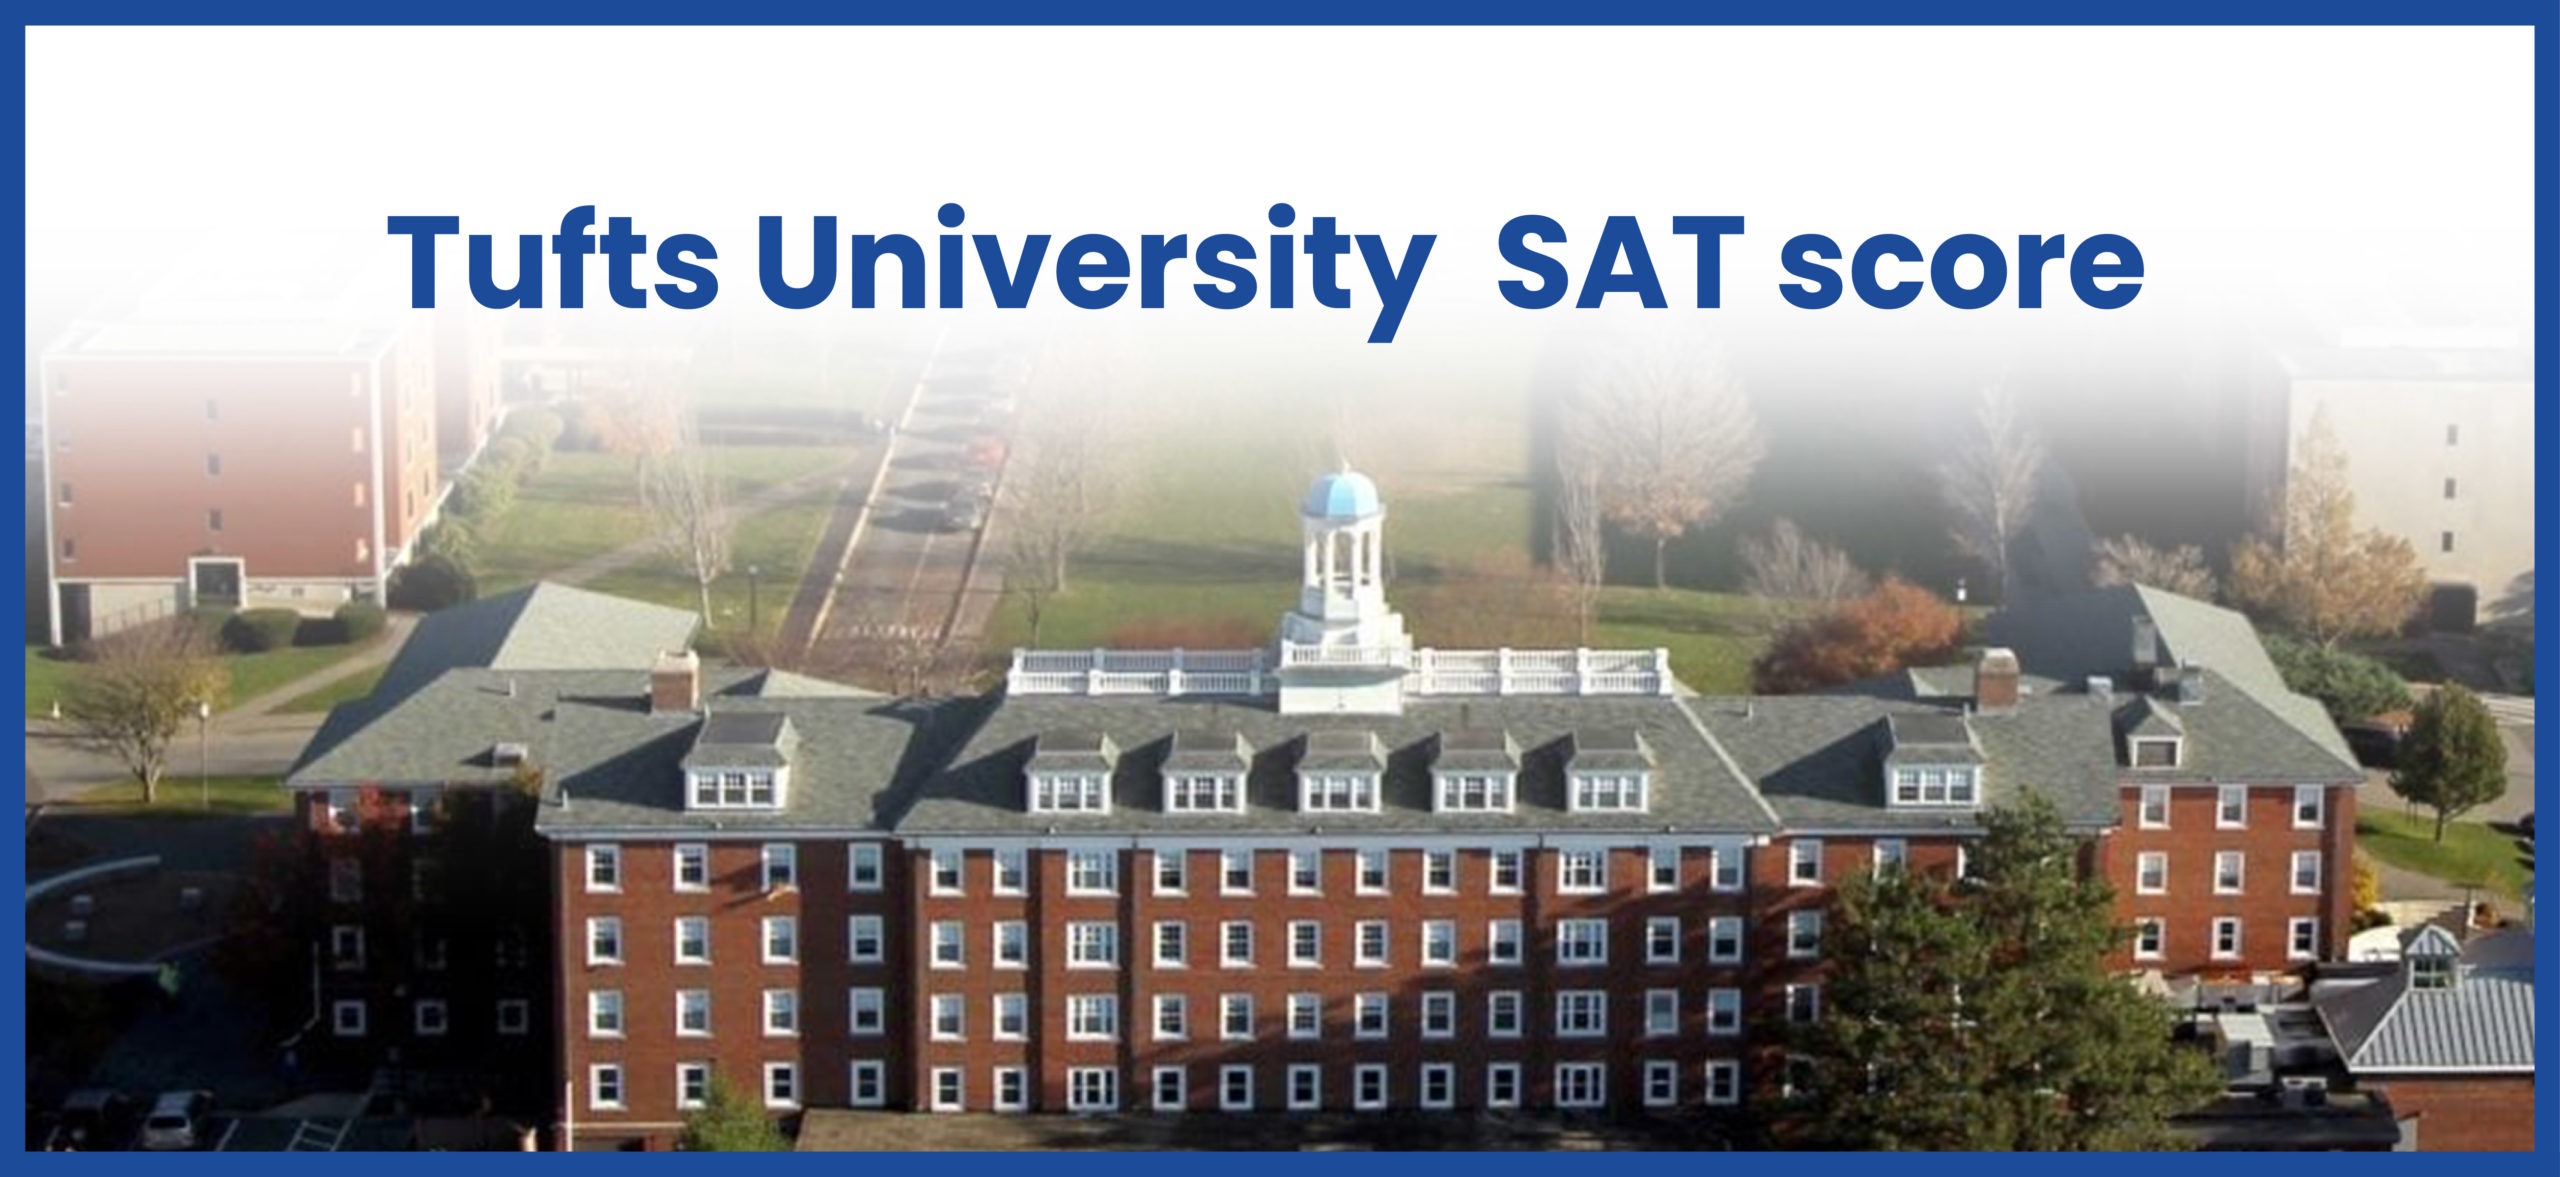 Tufts University SAT